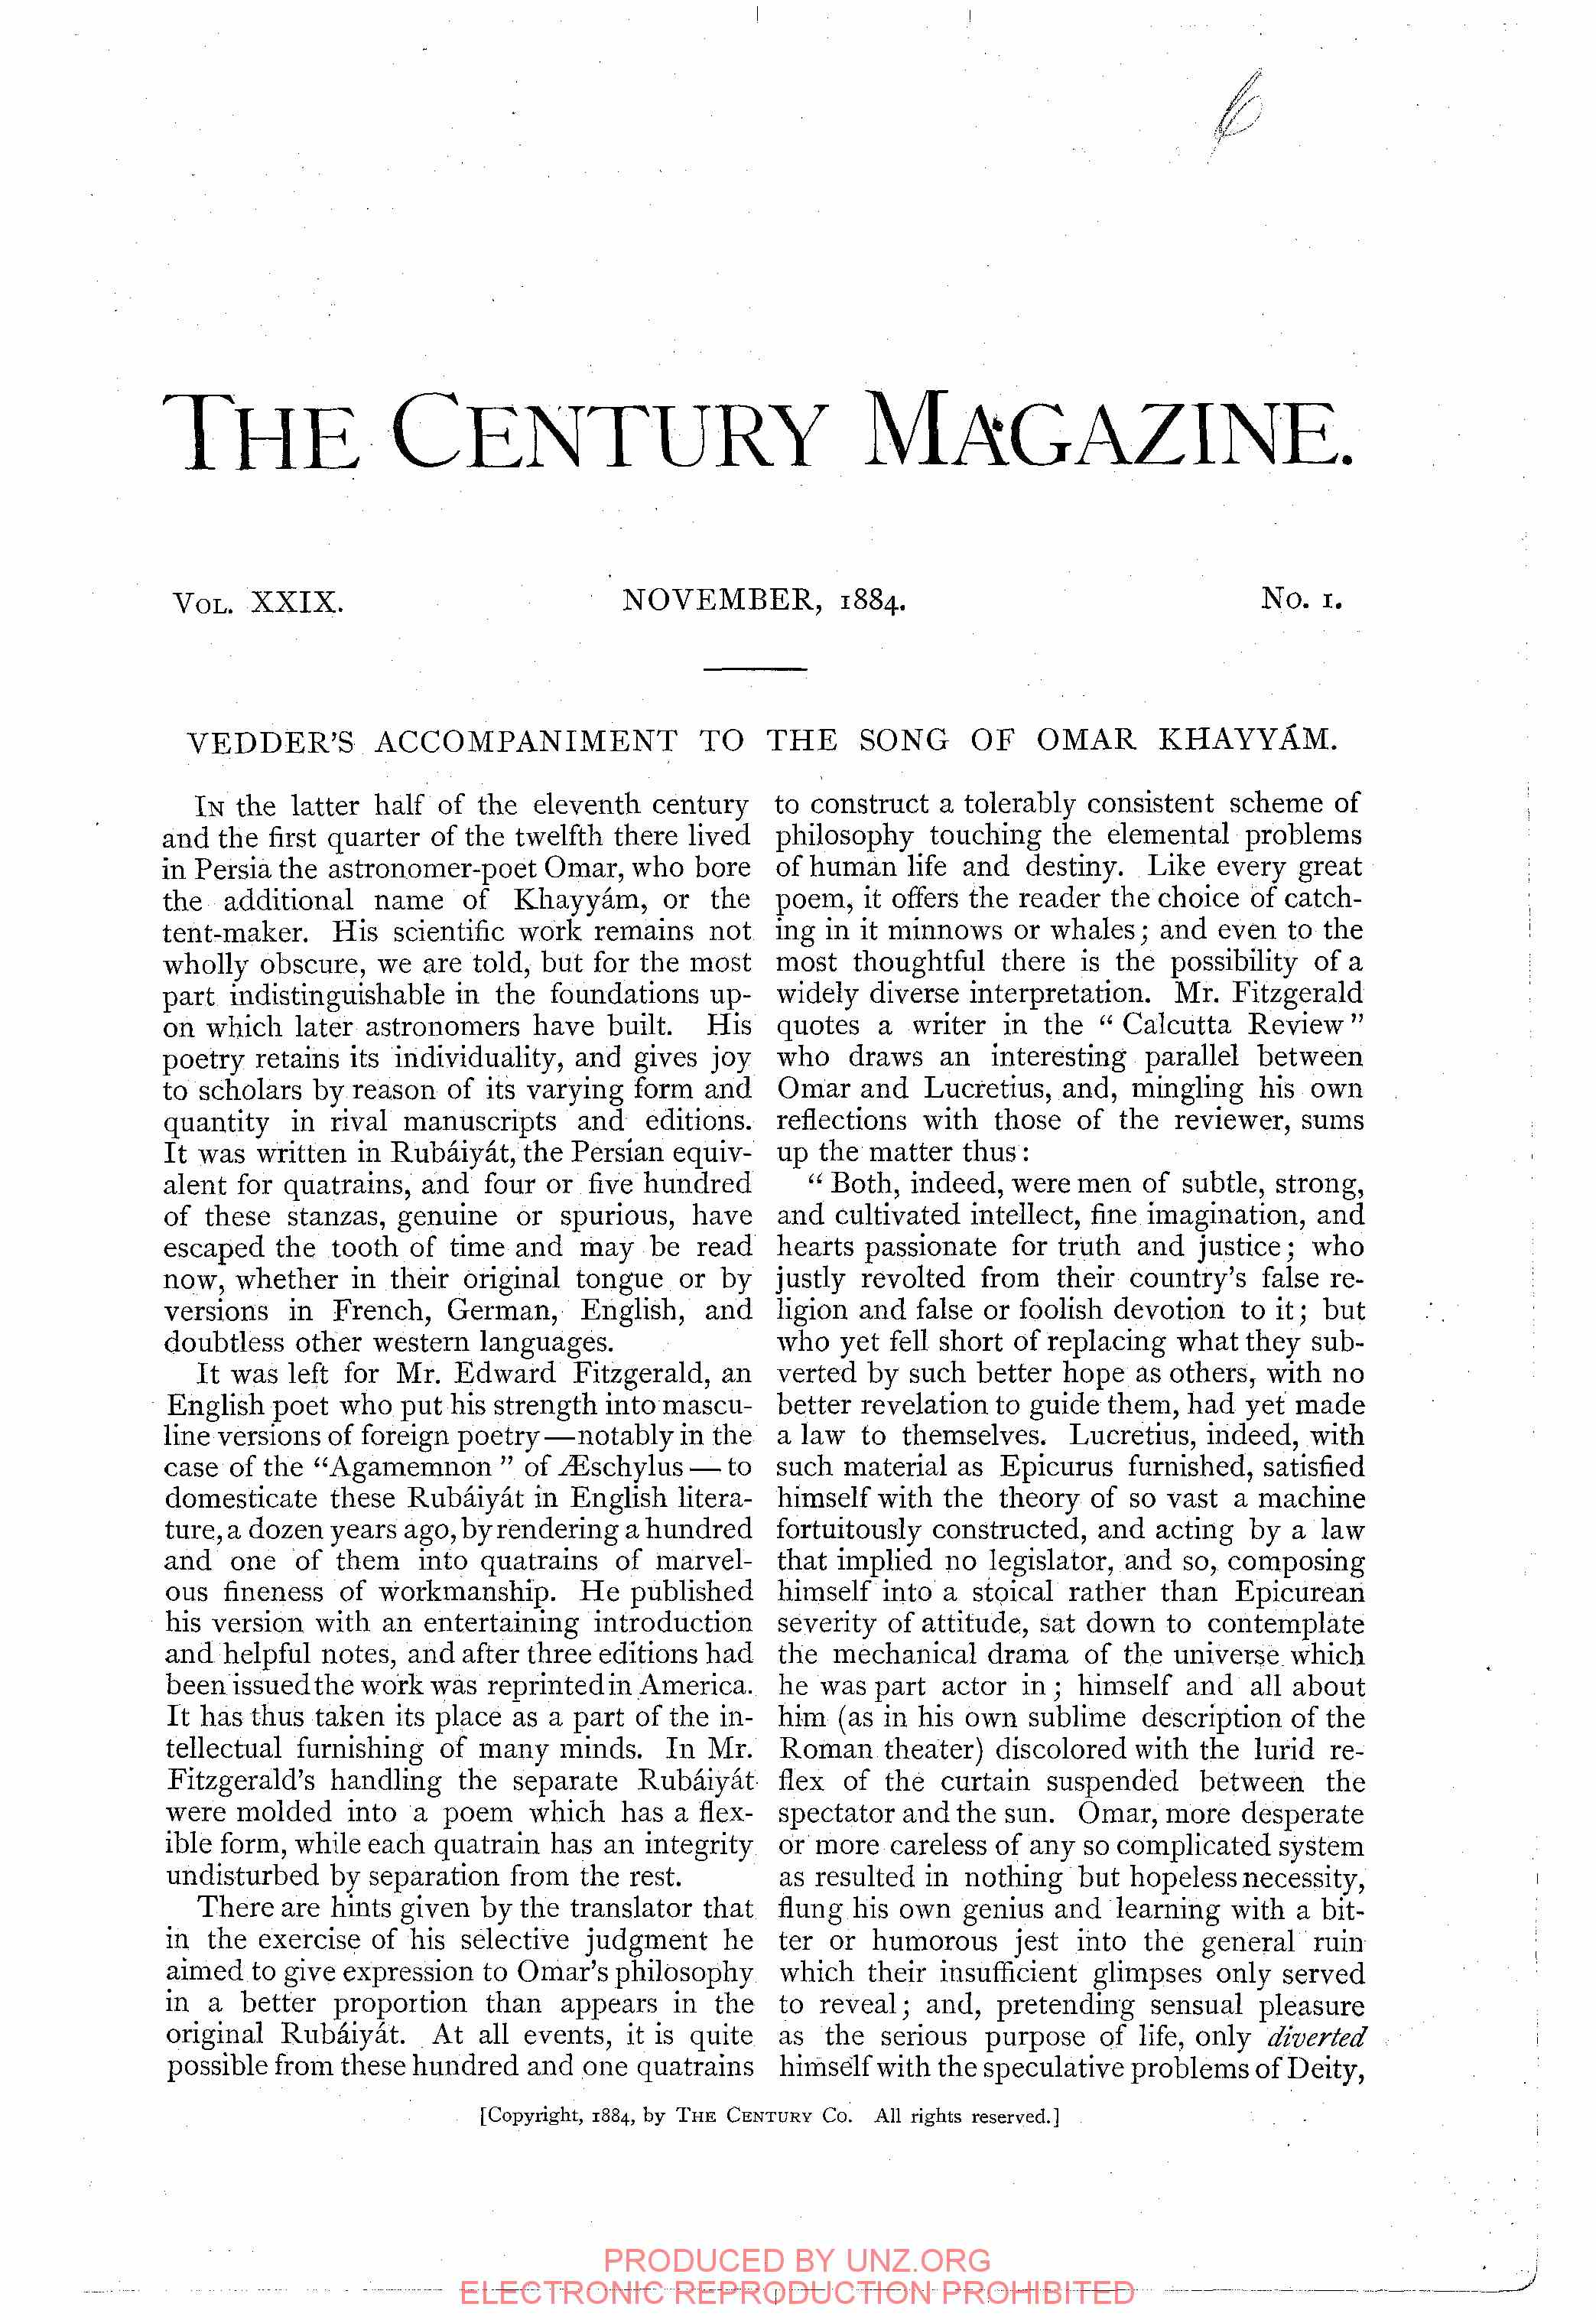 The Century Magazine